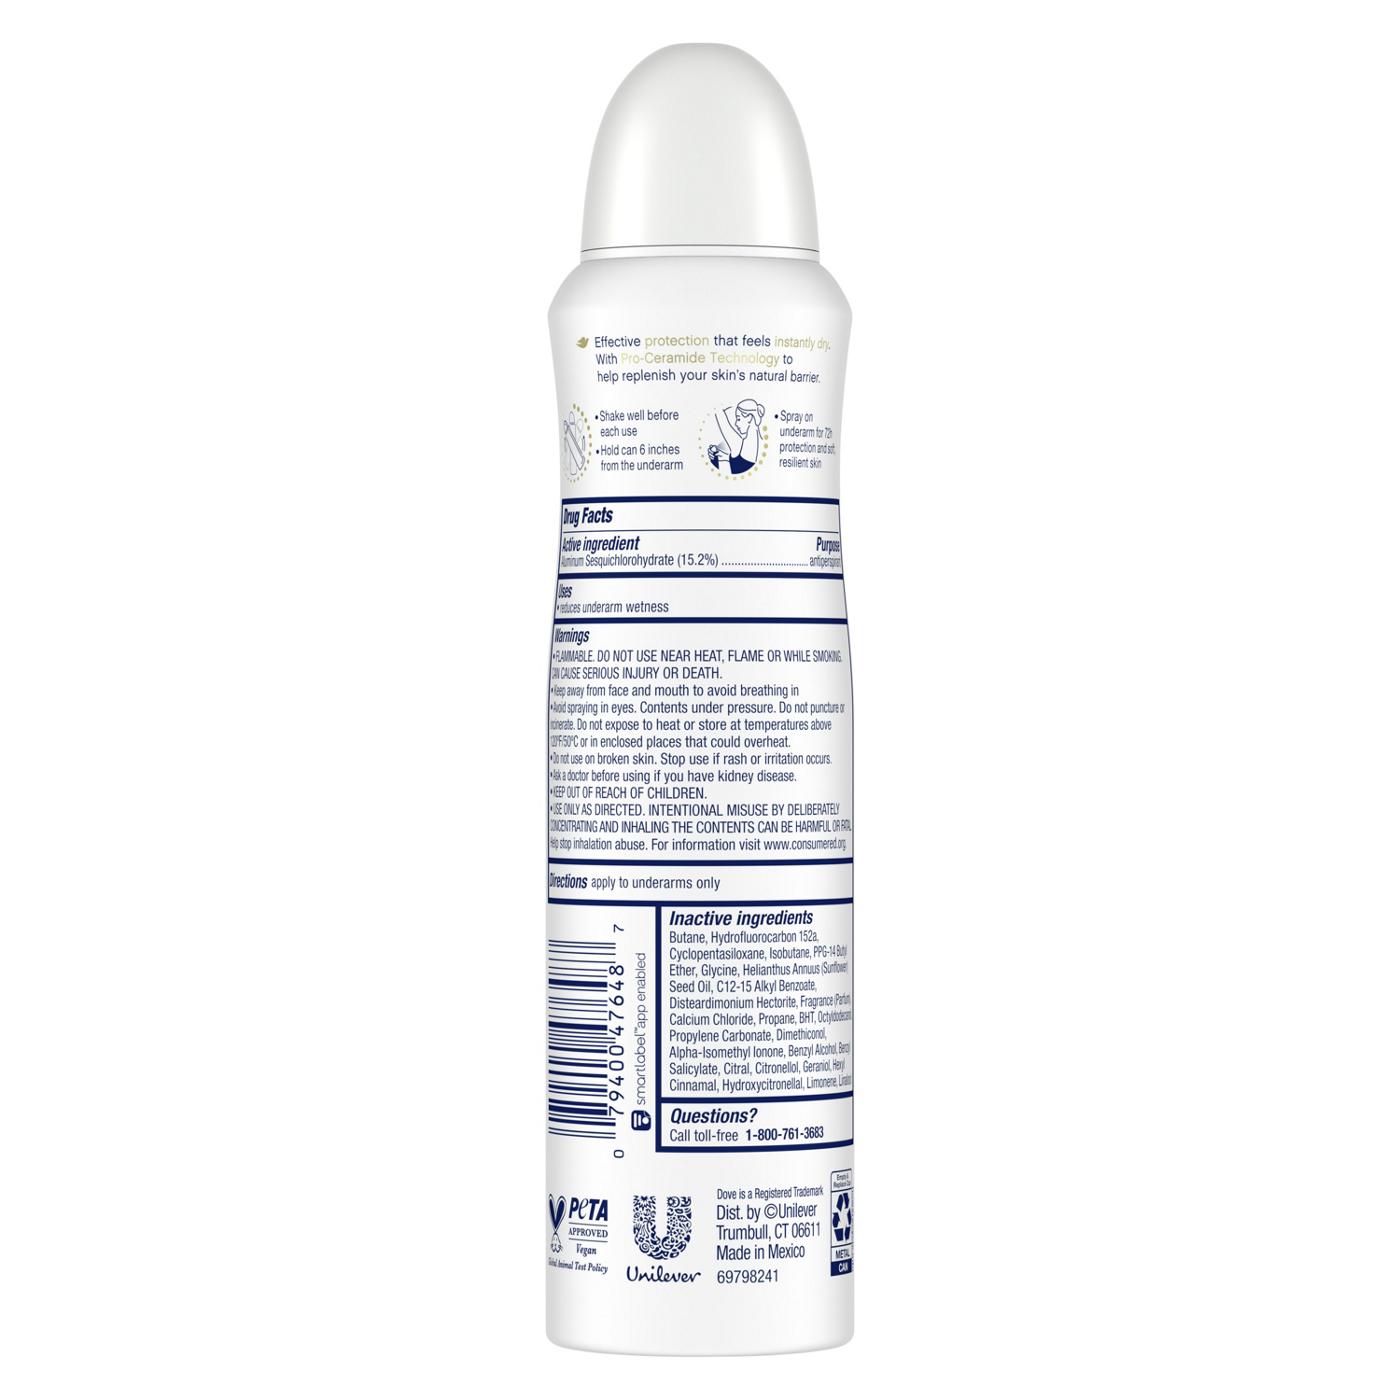 Dove Nourishing Secrets Waterlily & Sakura Blossom Dry Spray Antiperspirant Deodorant; image 6 of 7